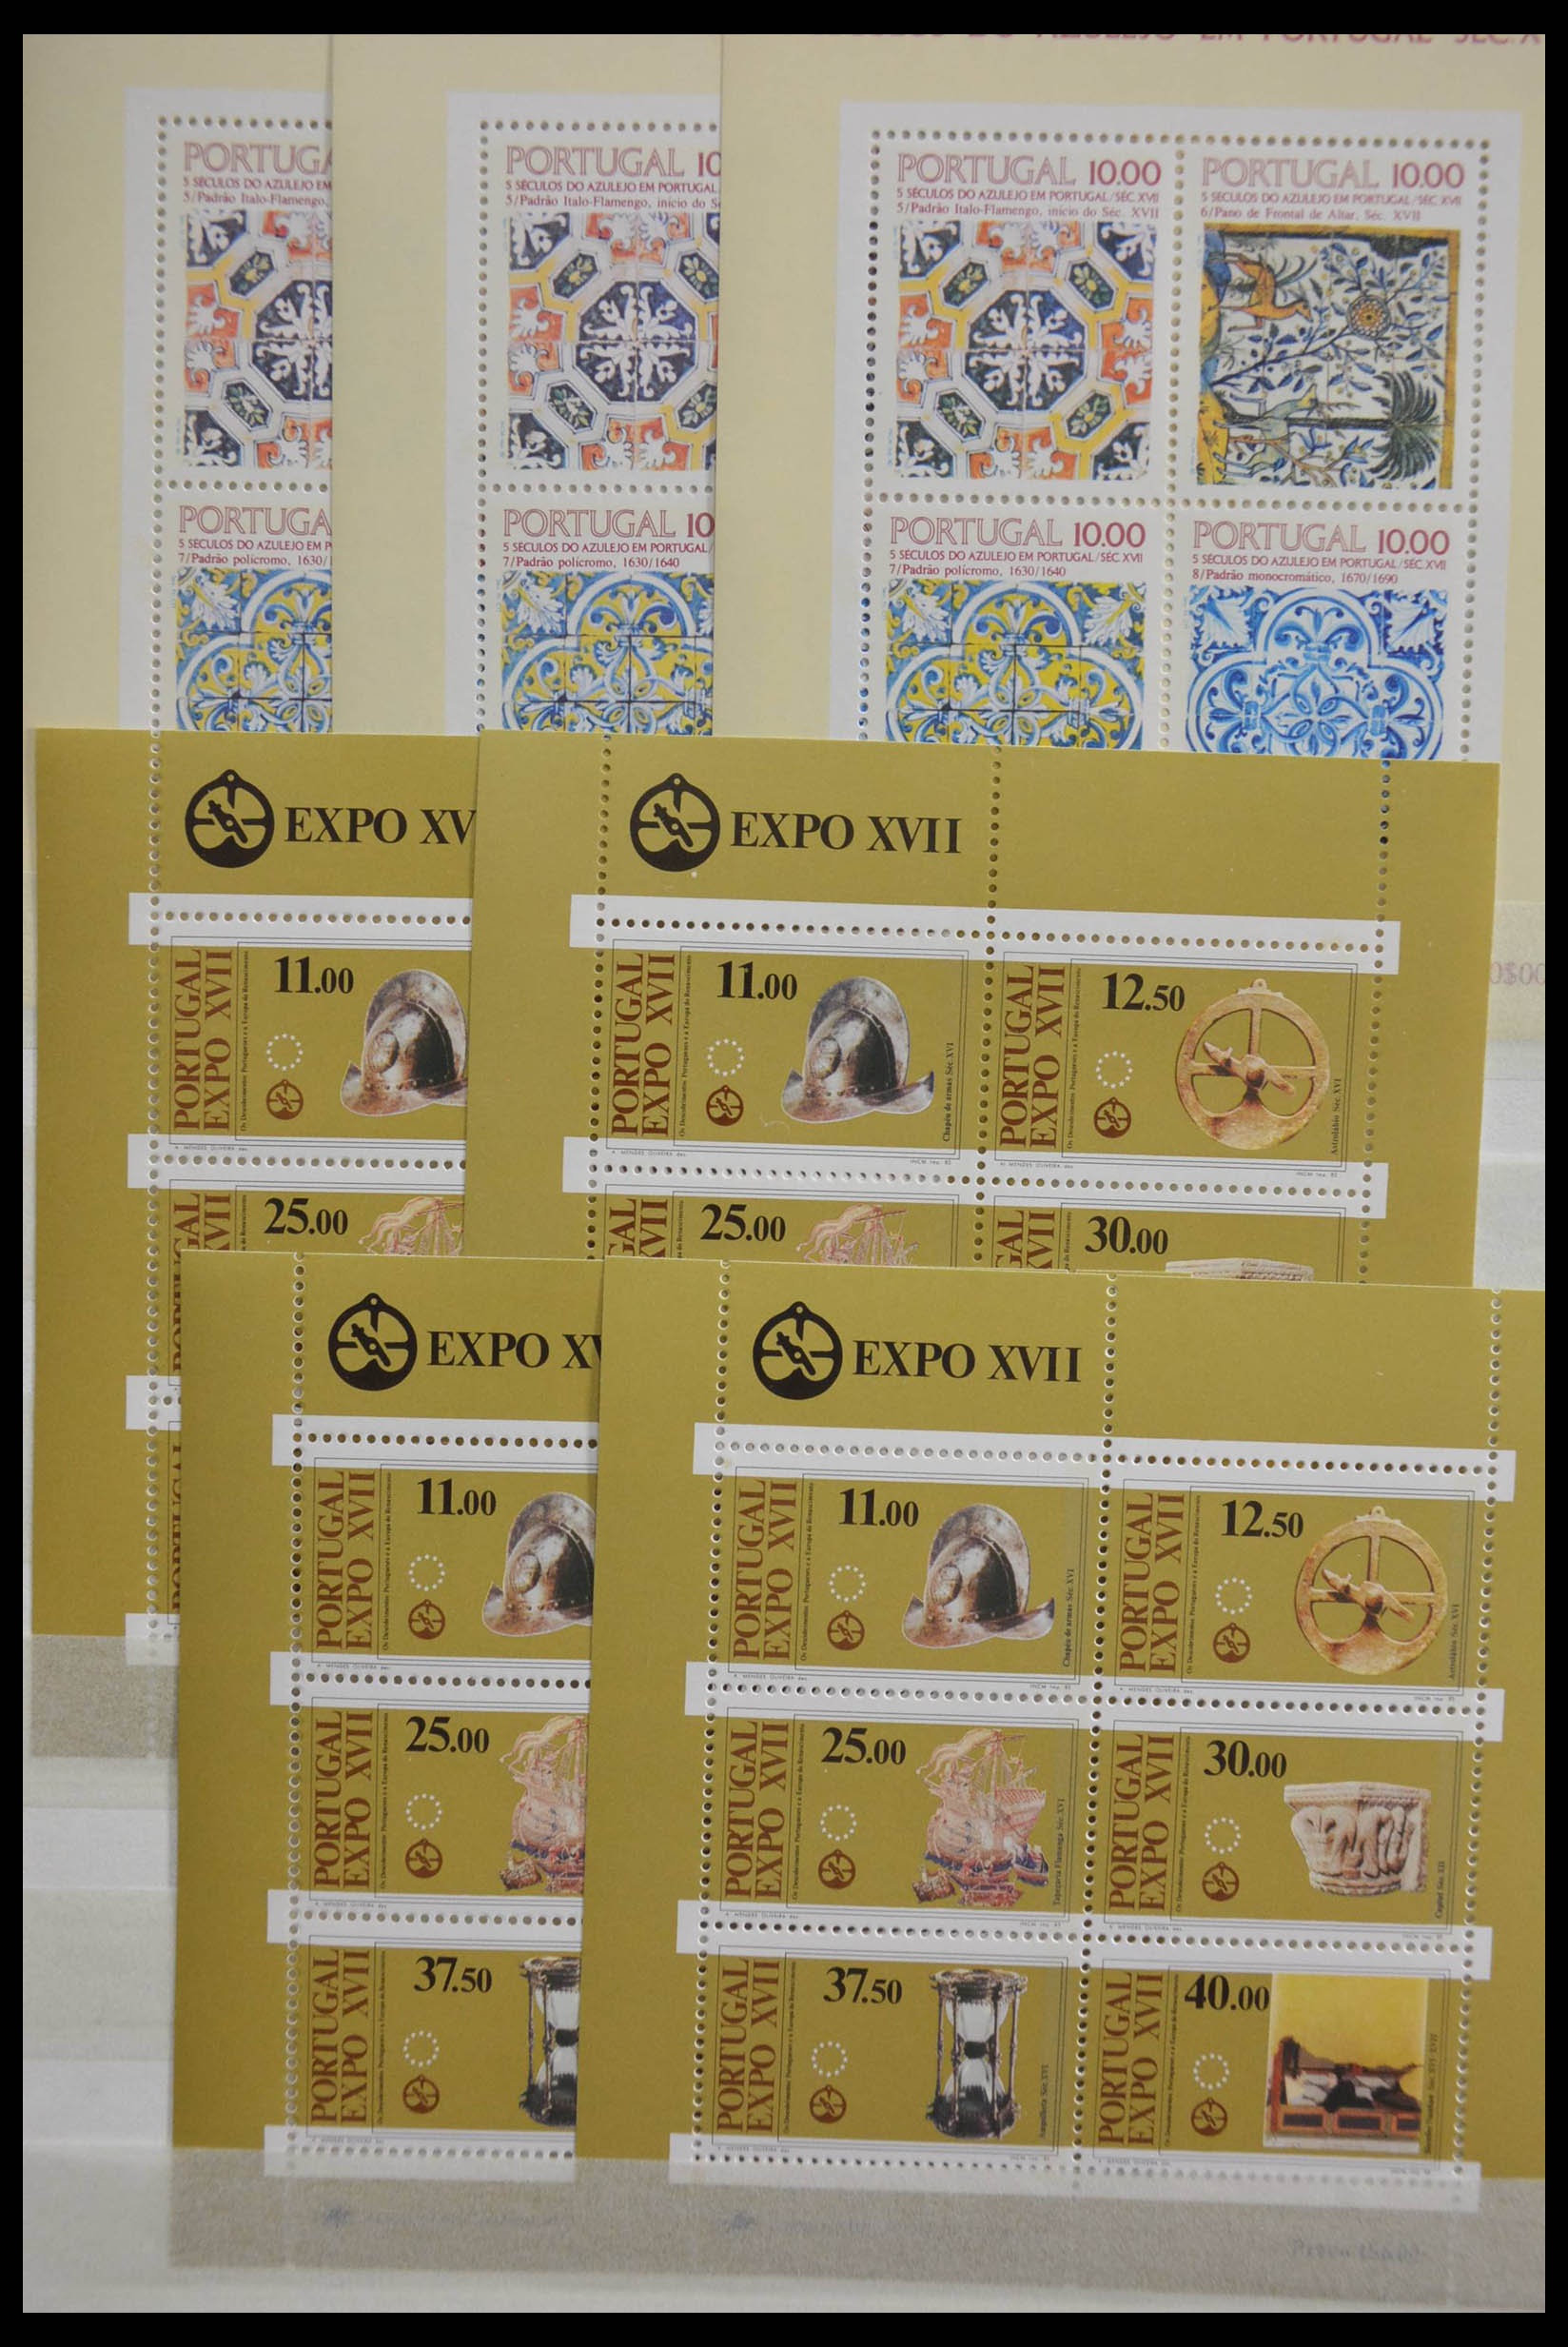 28540 004 - 28540 Portugal souvenir sheets.